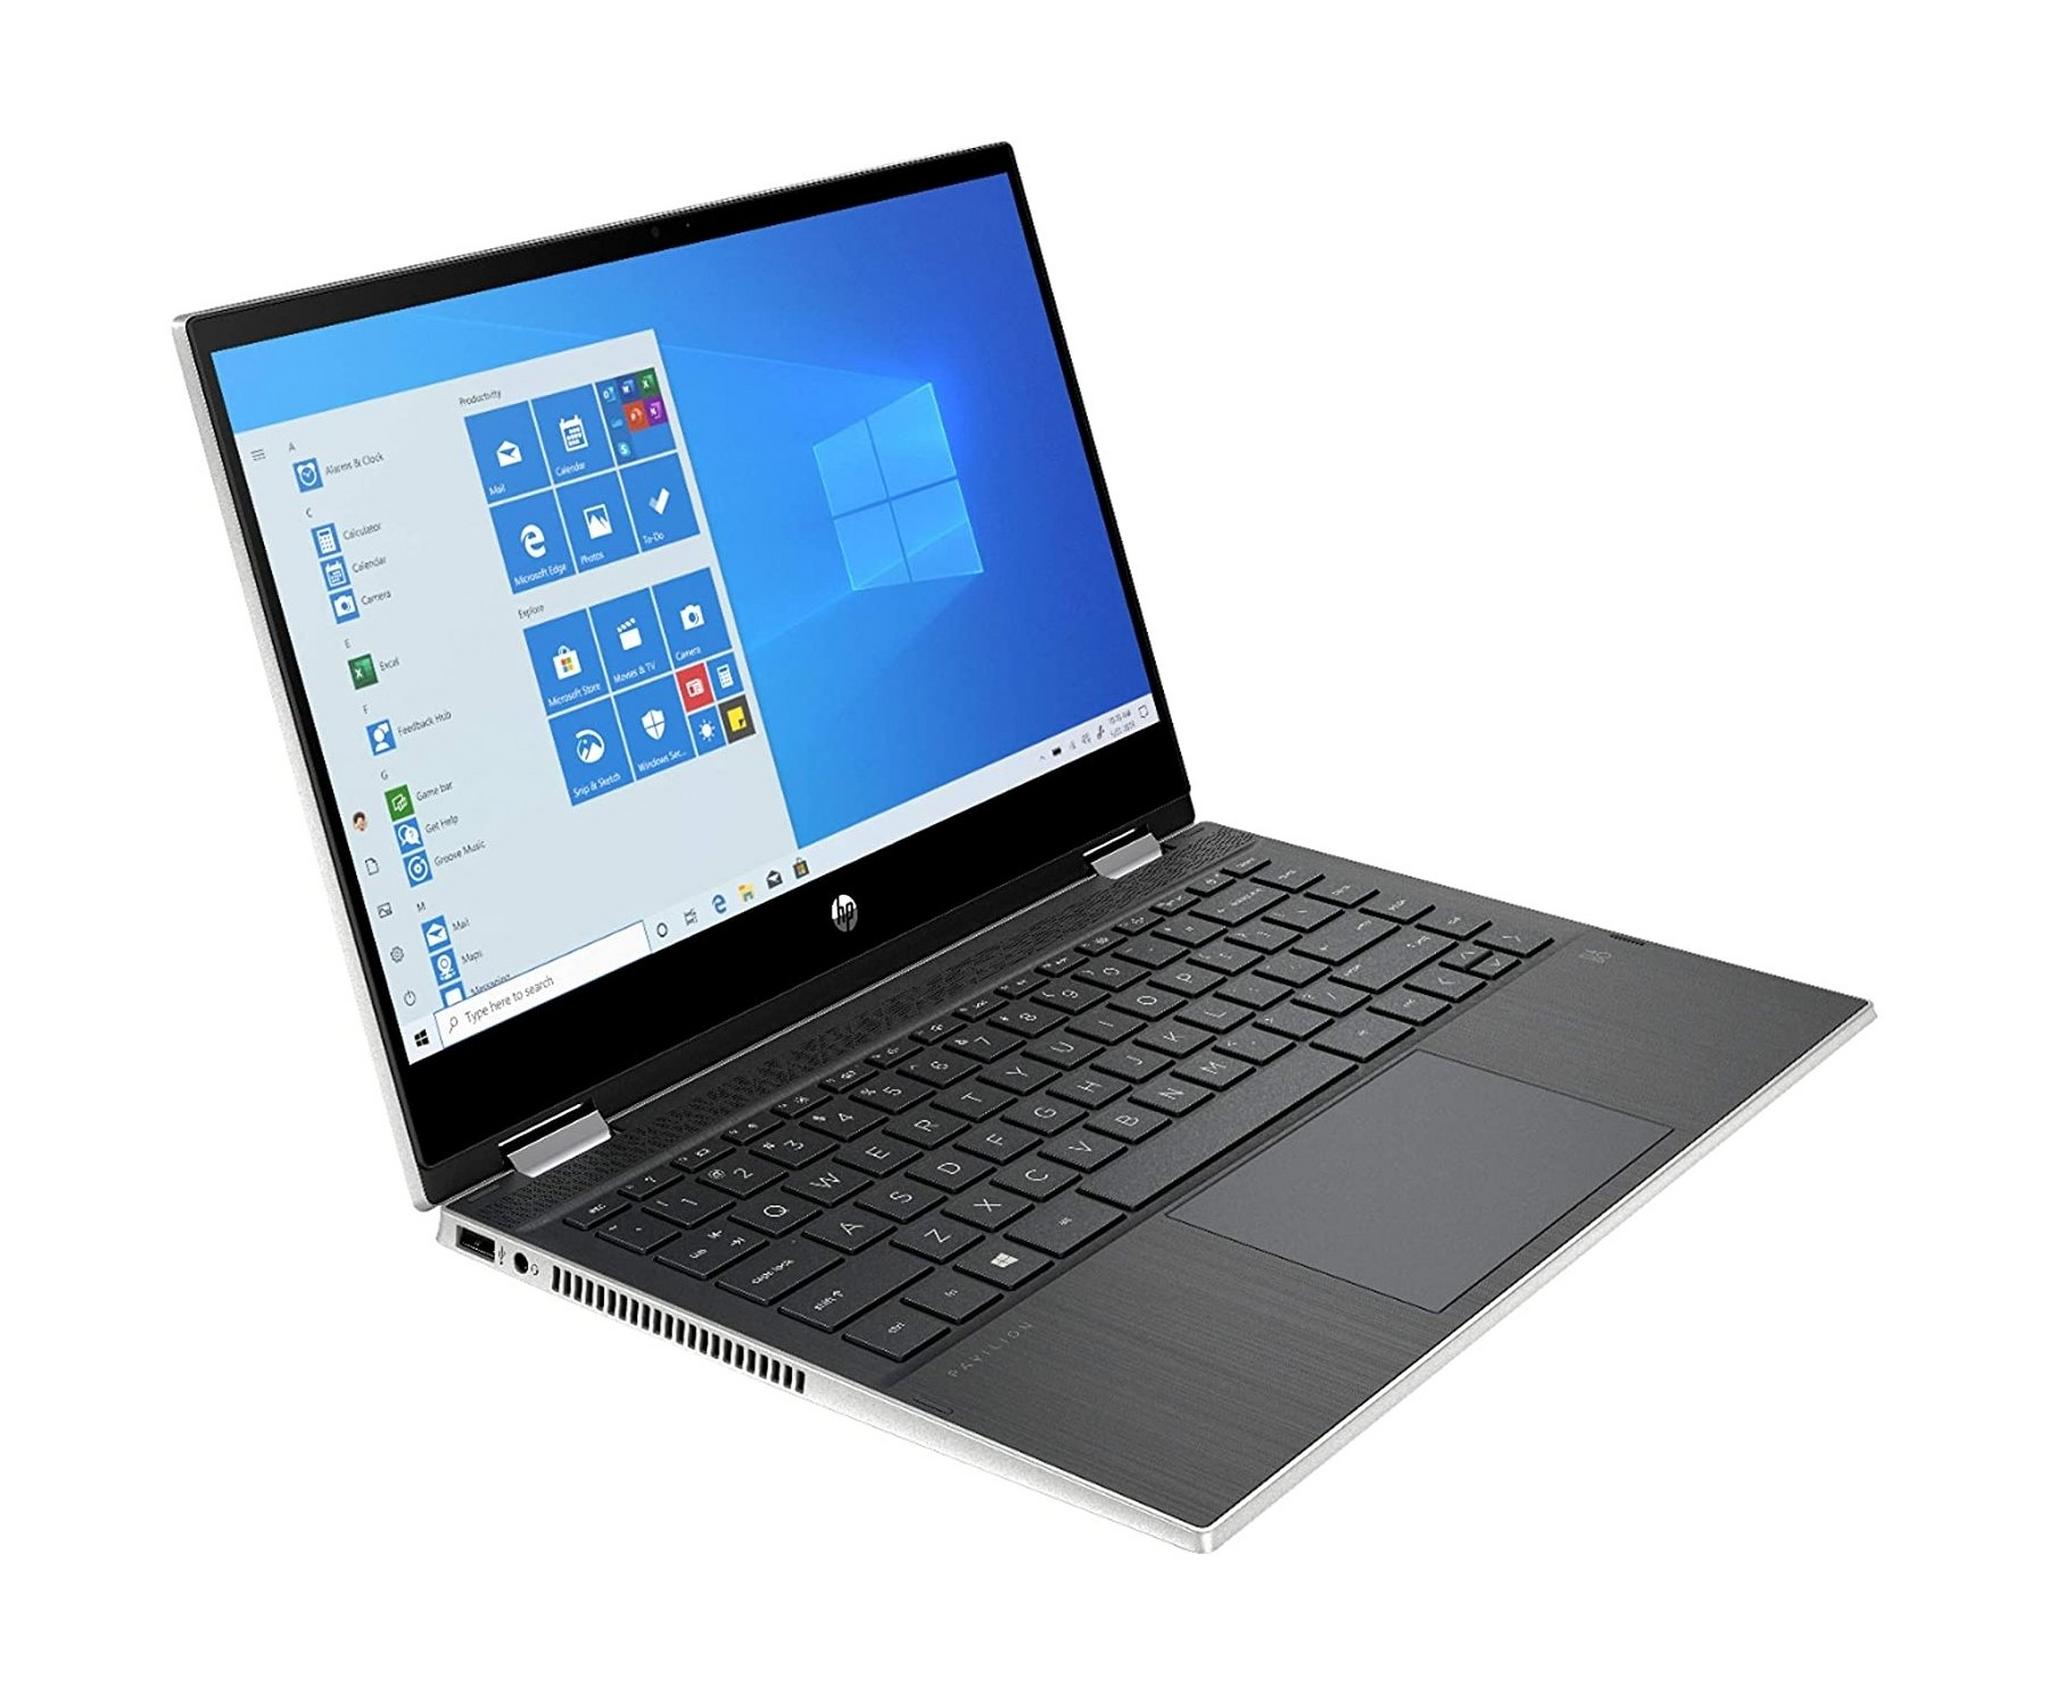 HP ENVY x360 AMD Ryzen 5 8GB RAM 512GB SSD 15.6" FHD Touch Laptop - Black